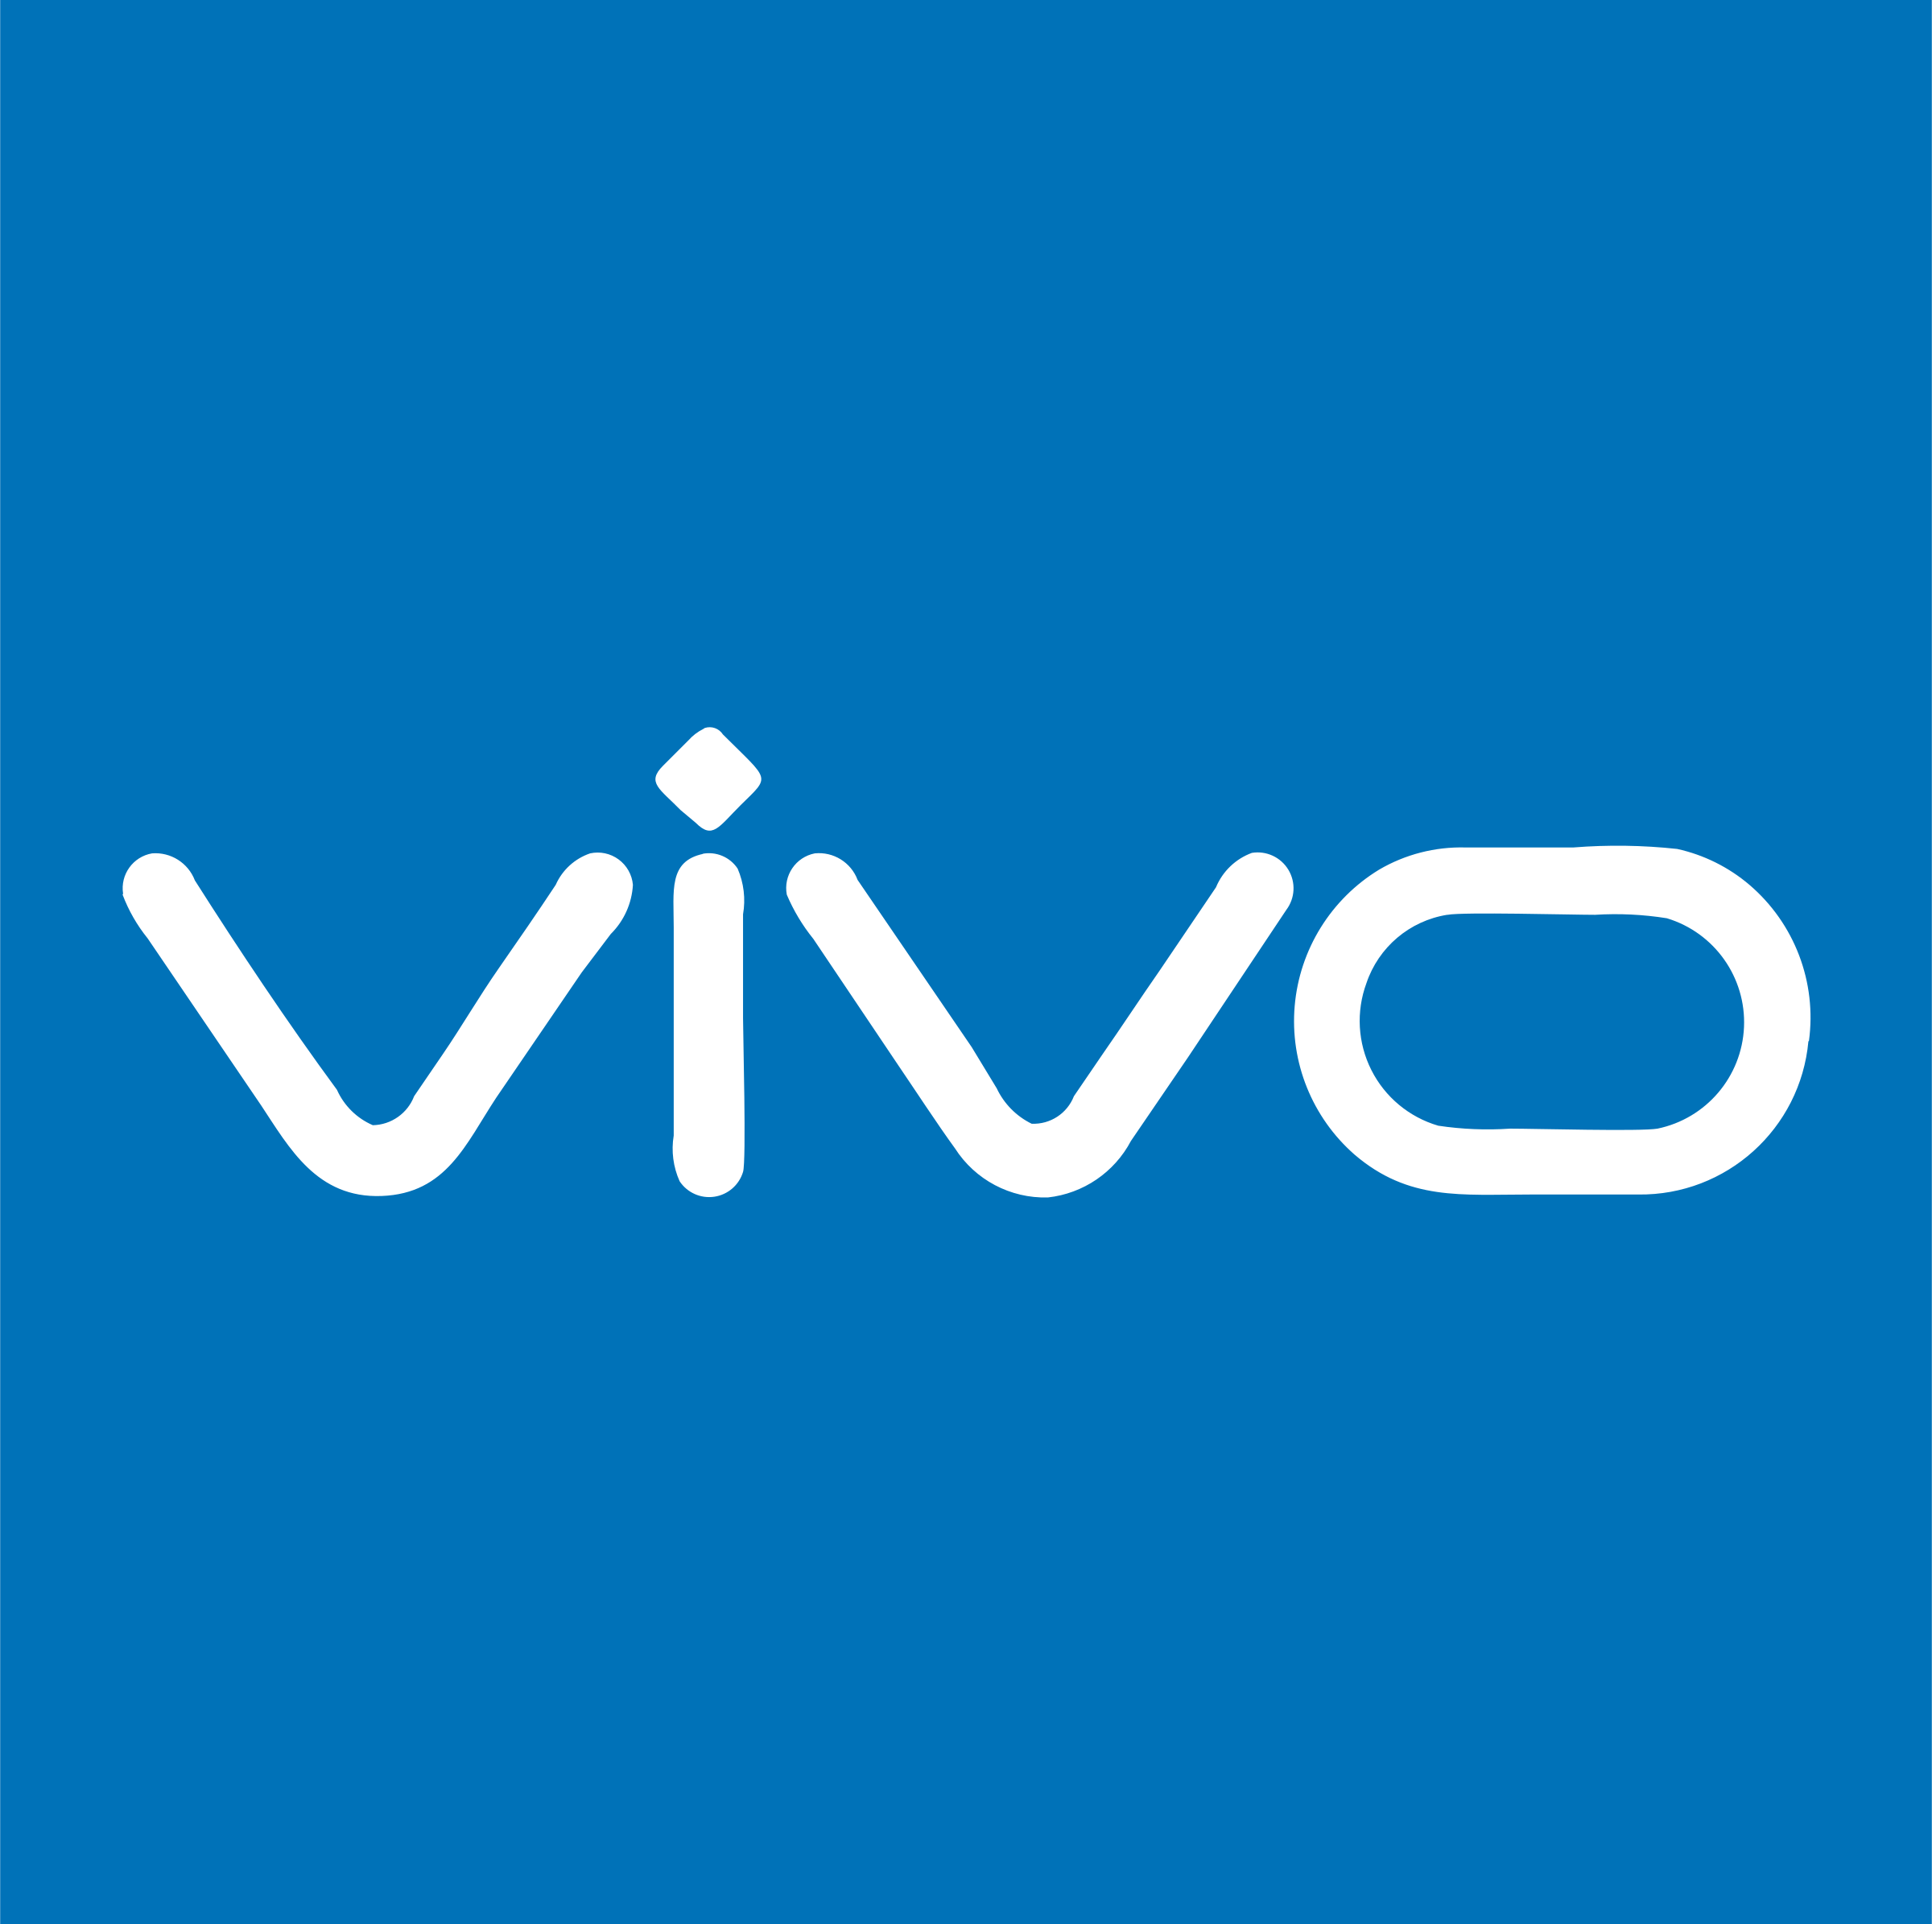 Vivo Logo Png Transparent & Svg Vector   Pluspng Pluspng.com - Vivo, Transparent background PNG HD thumbnail